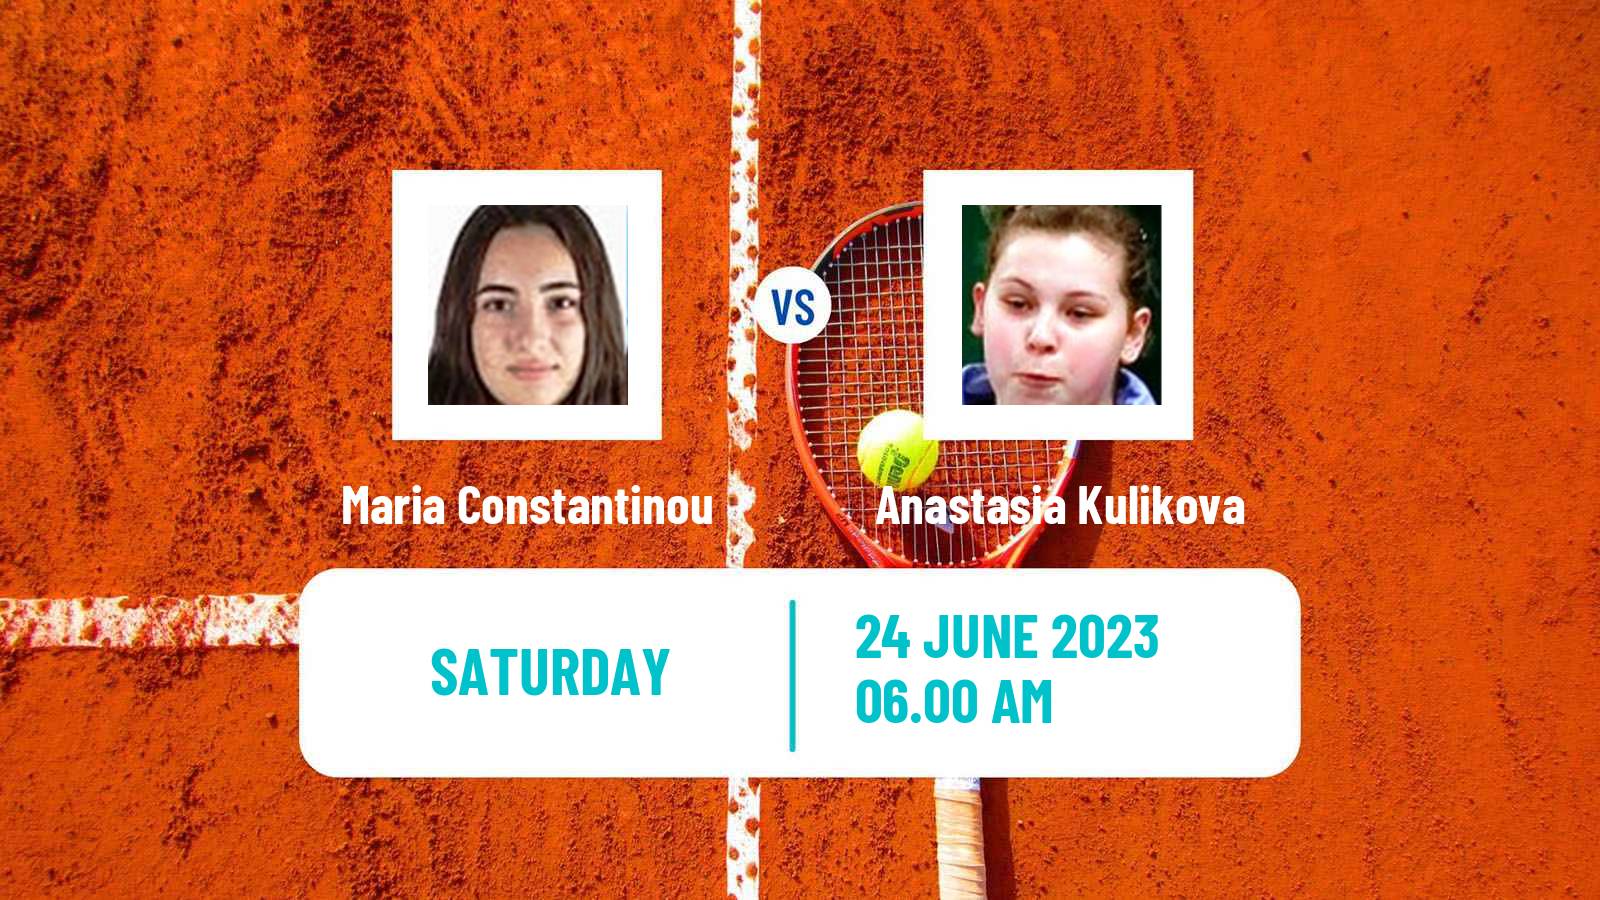 Tennis WTA Billie Jean King Cup Group III Maria Constantinou - Anastasia Kulikova